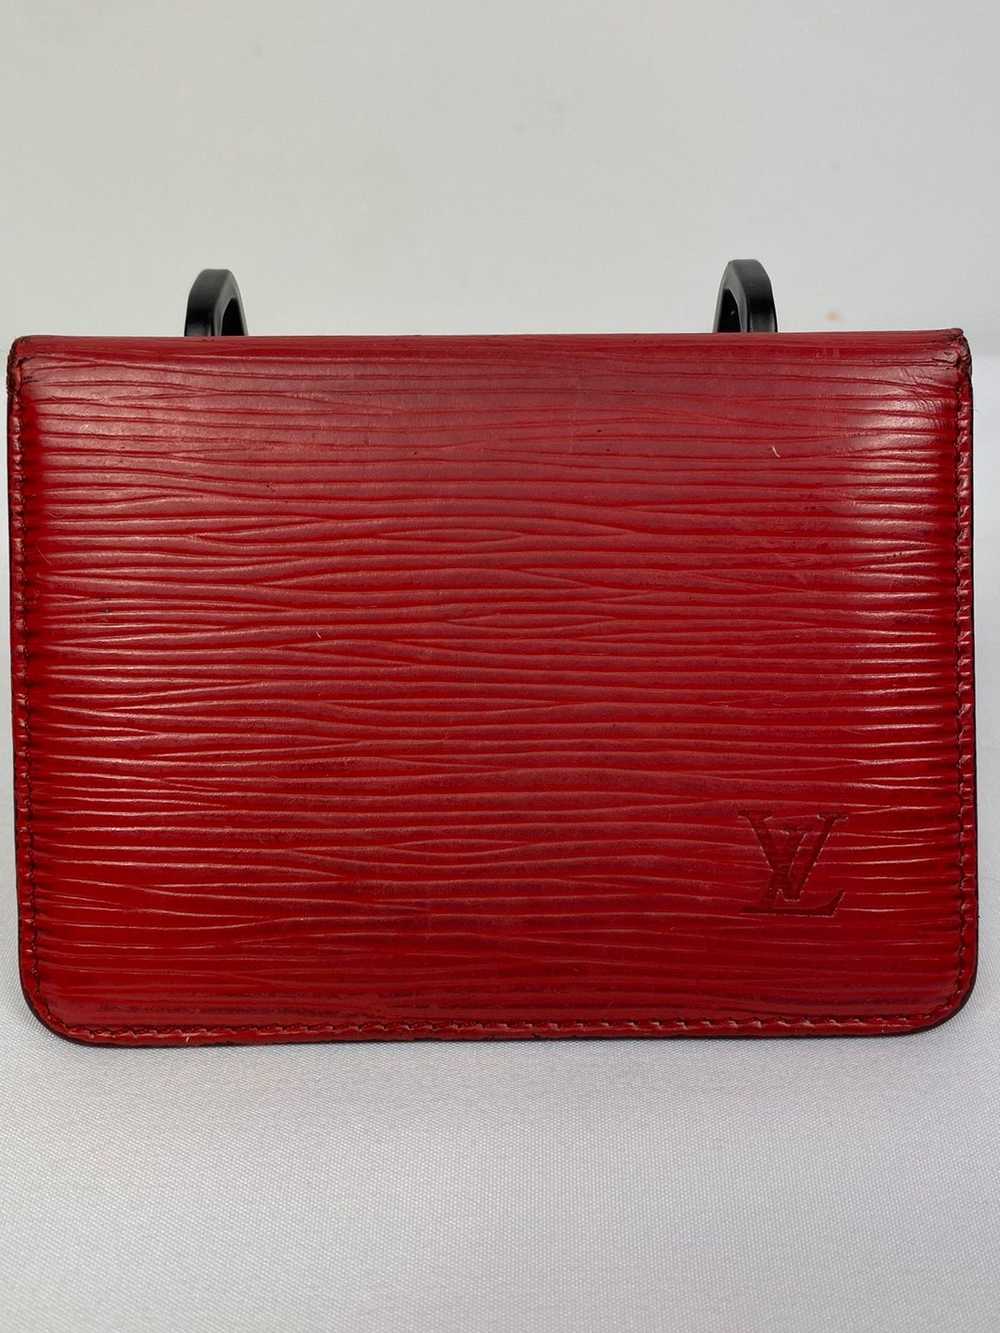 Louis Vuitton EPI Card Holder - image 1